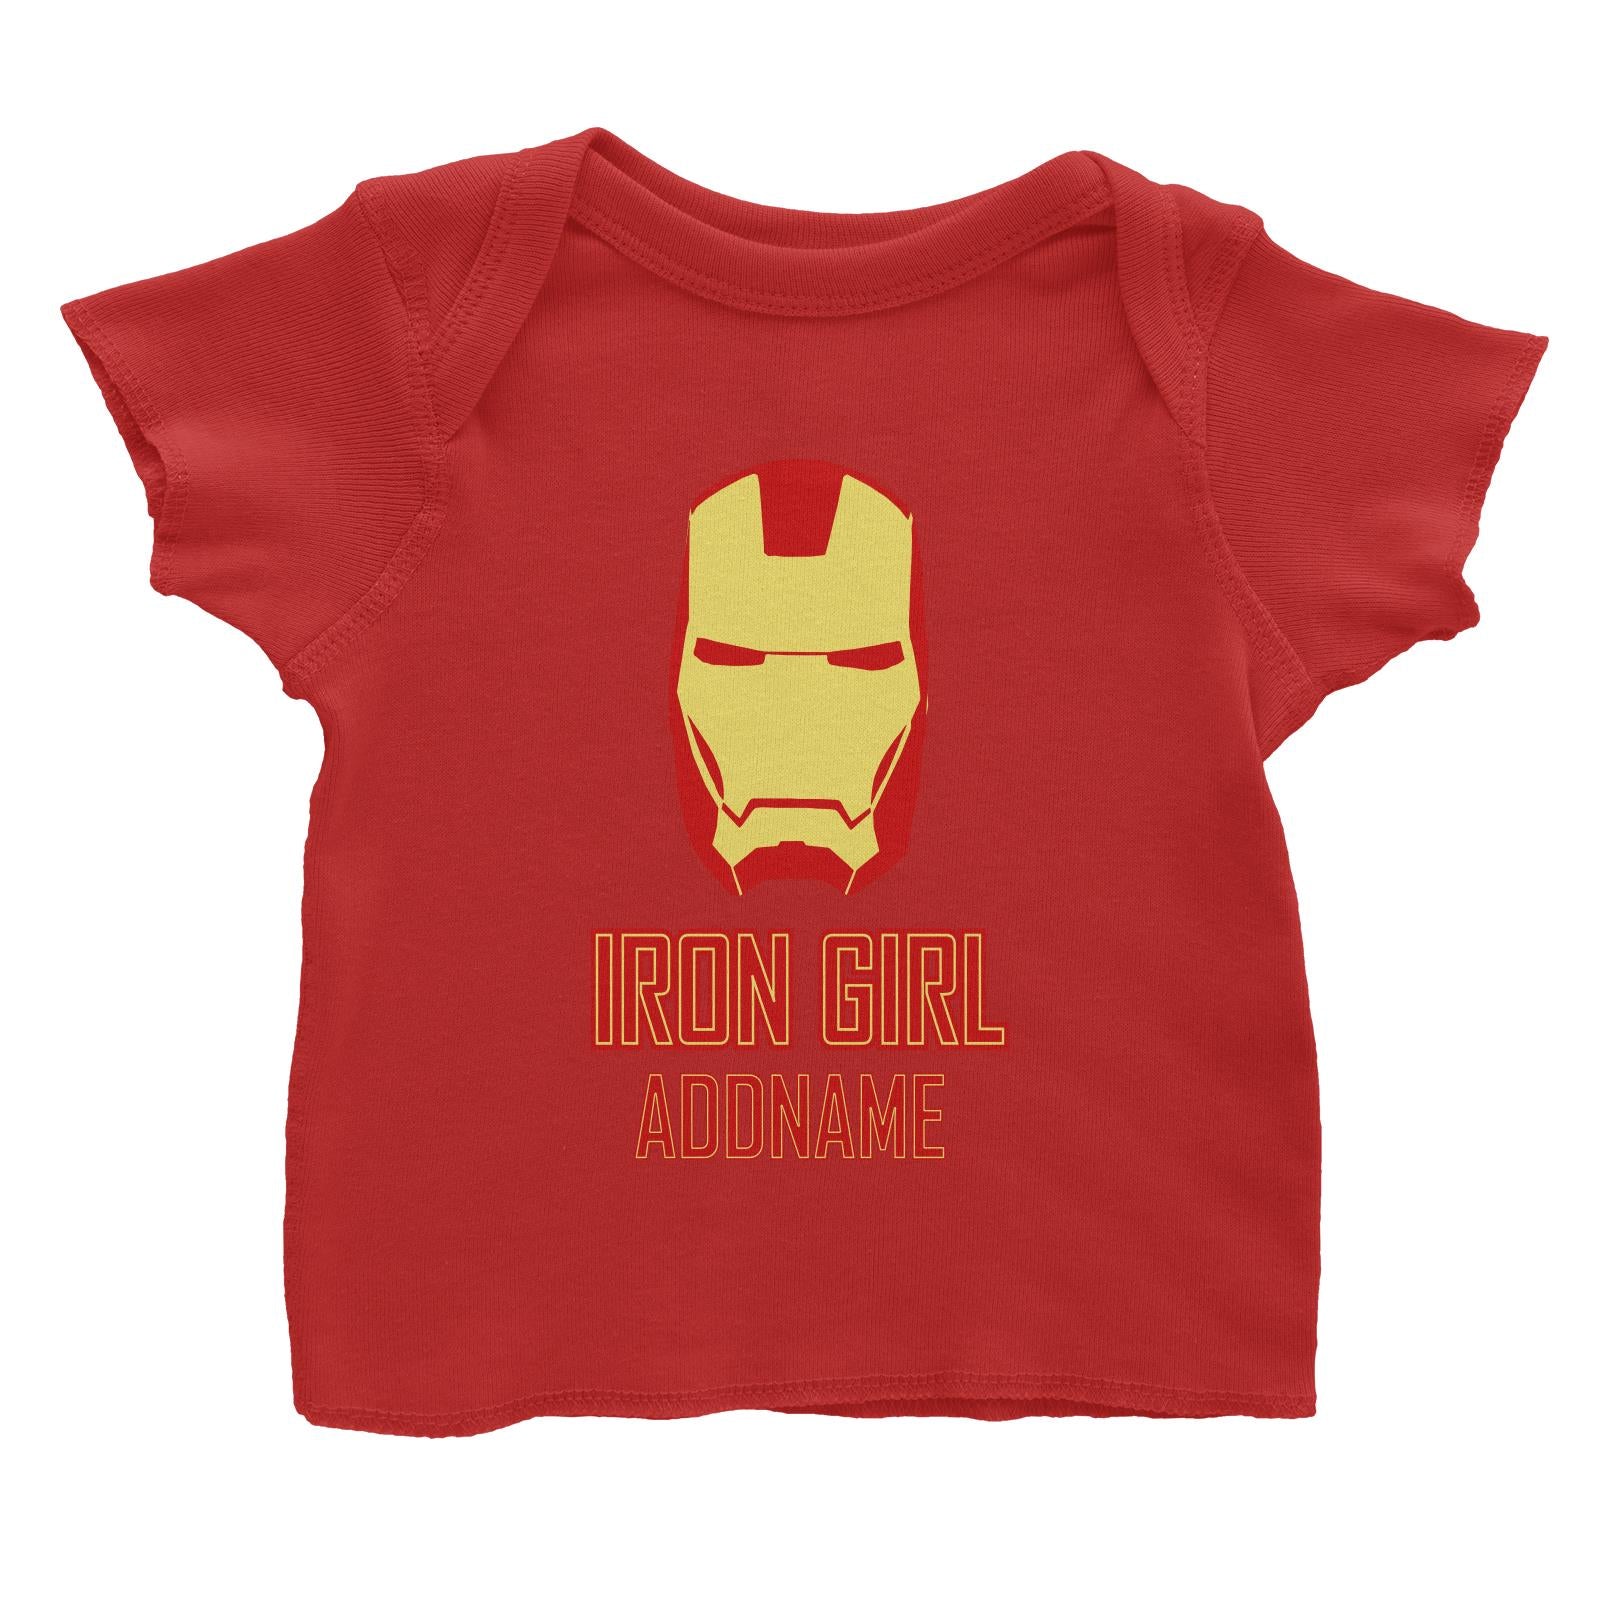 Superhero Iron Girl Addname Baby T-Shirt  Matching Family Personalizable Designs